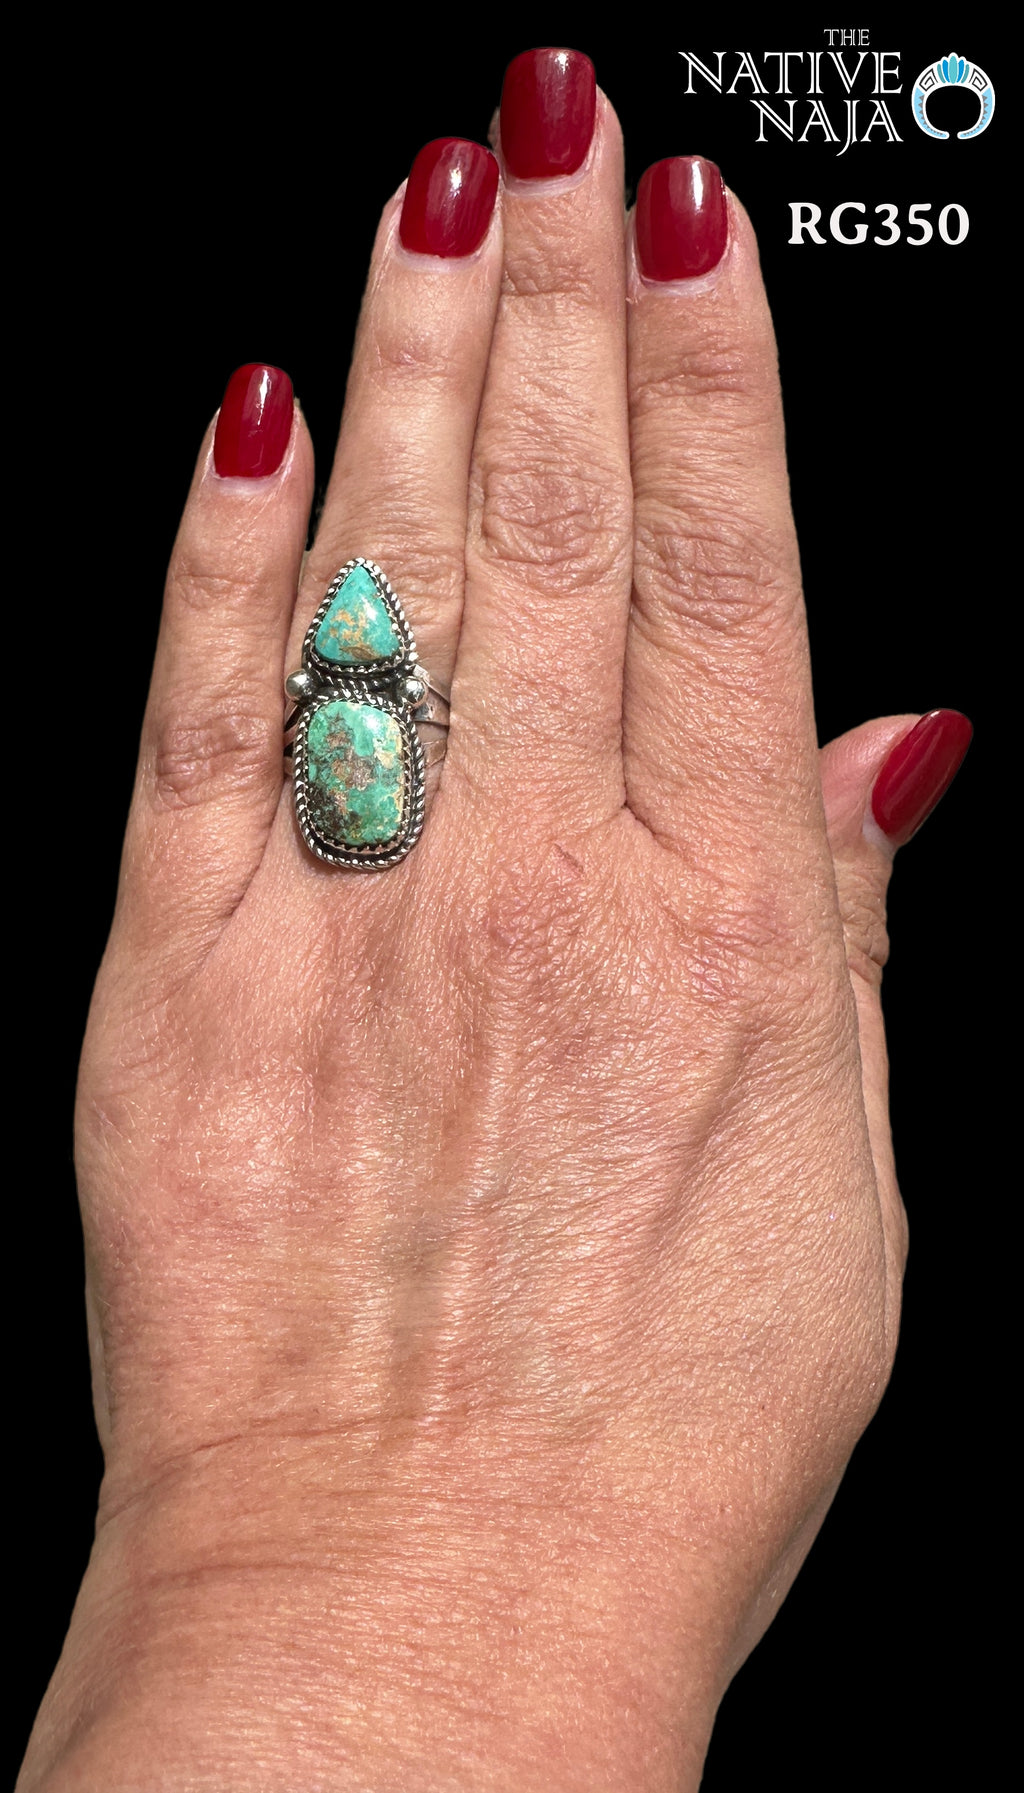 Navajo Artist LaRosa Ganadonegro Sterling Silver & Rare Blue Gem Turquoise Ring SZ 7 1/2 RG350